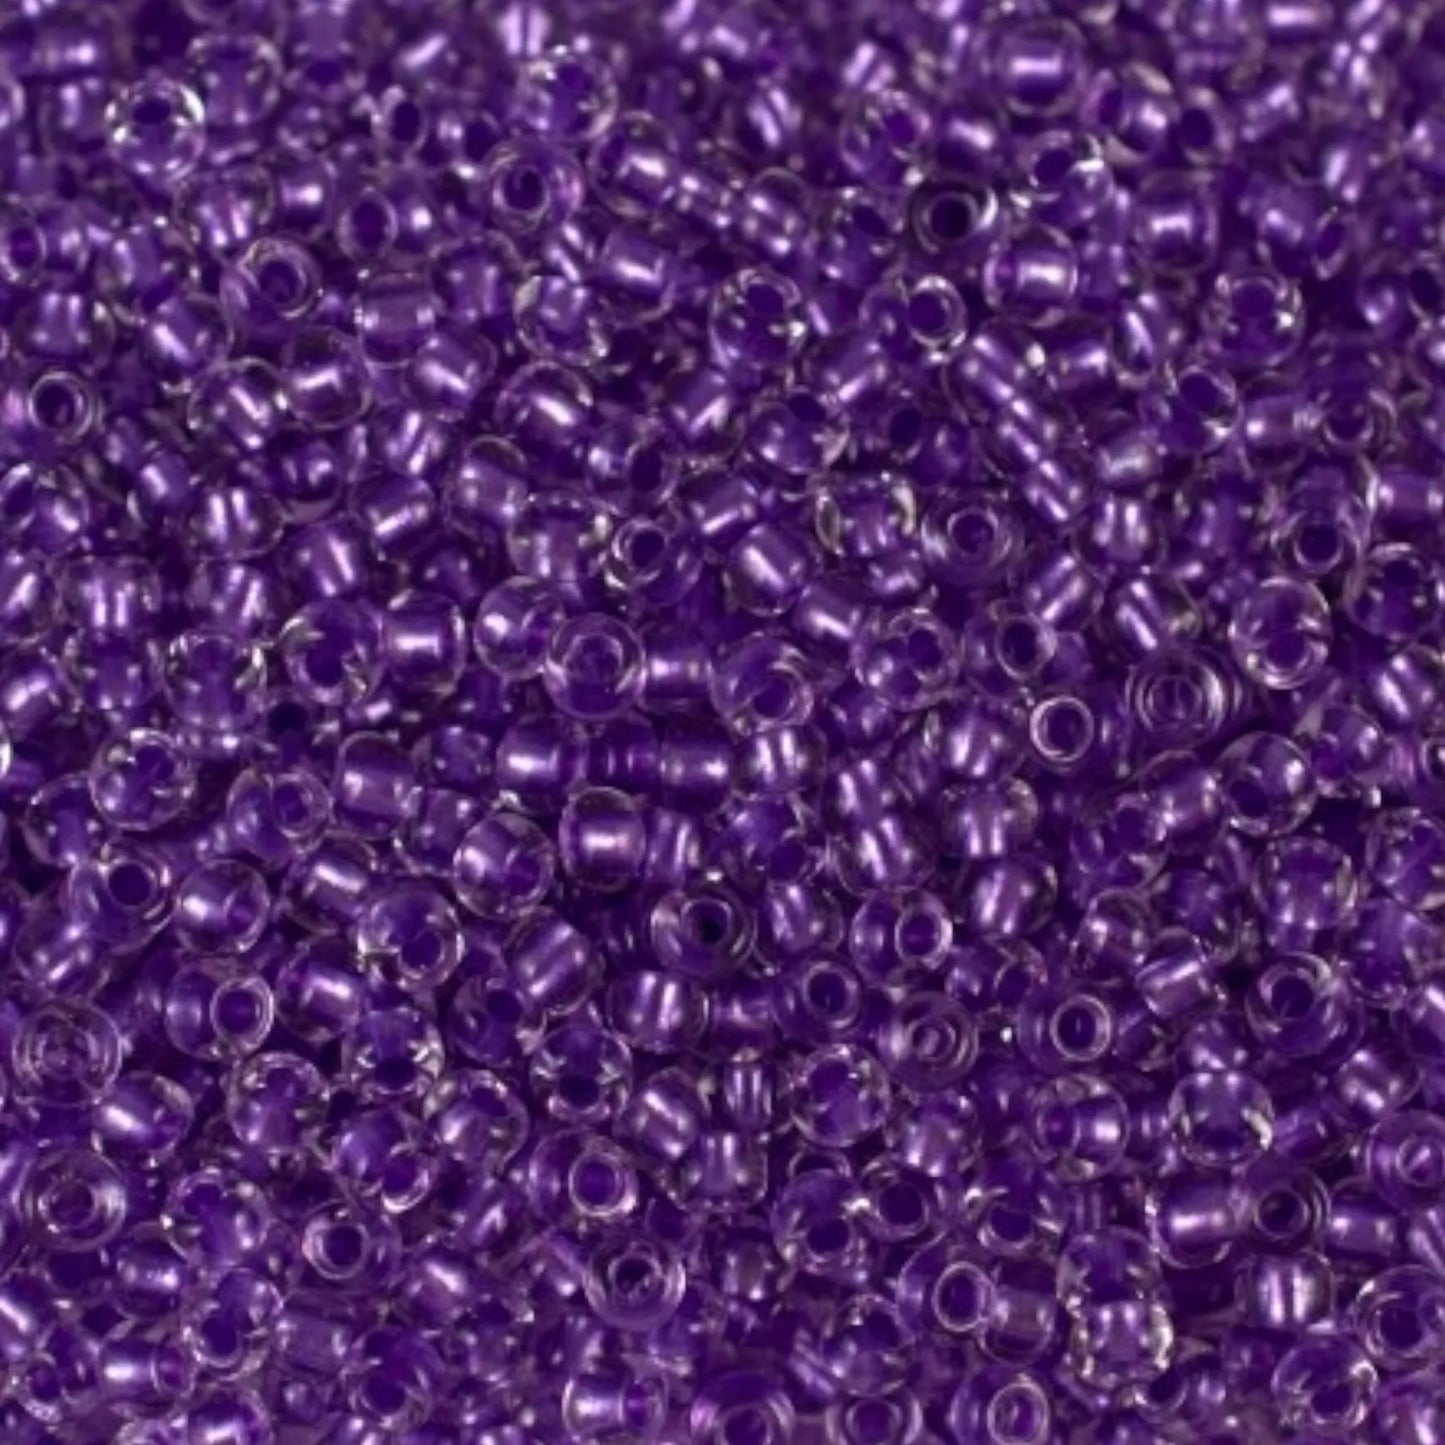 38928 Czech seed beads PRECIOSA Rocailles 10/0 purple. Crystal - Terra Pearl Lined.